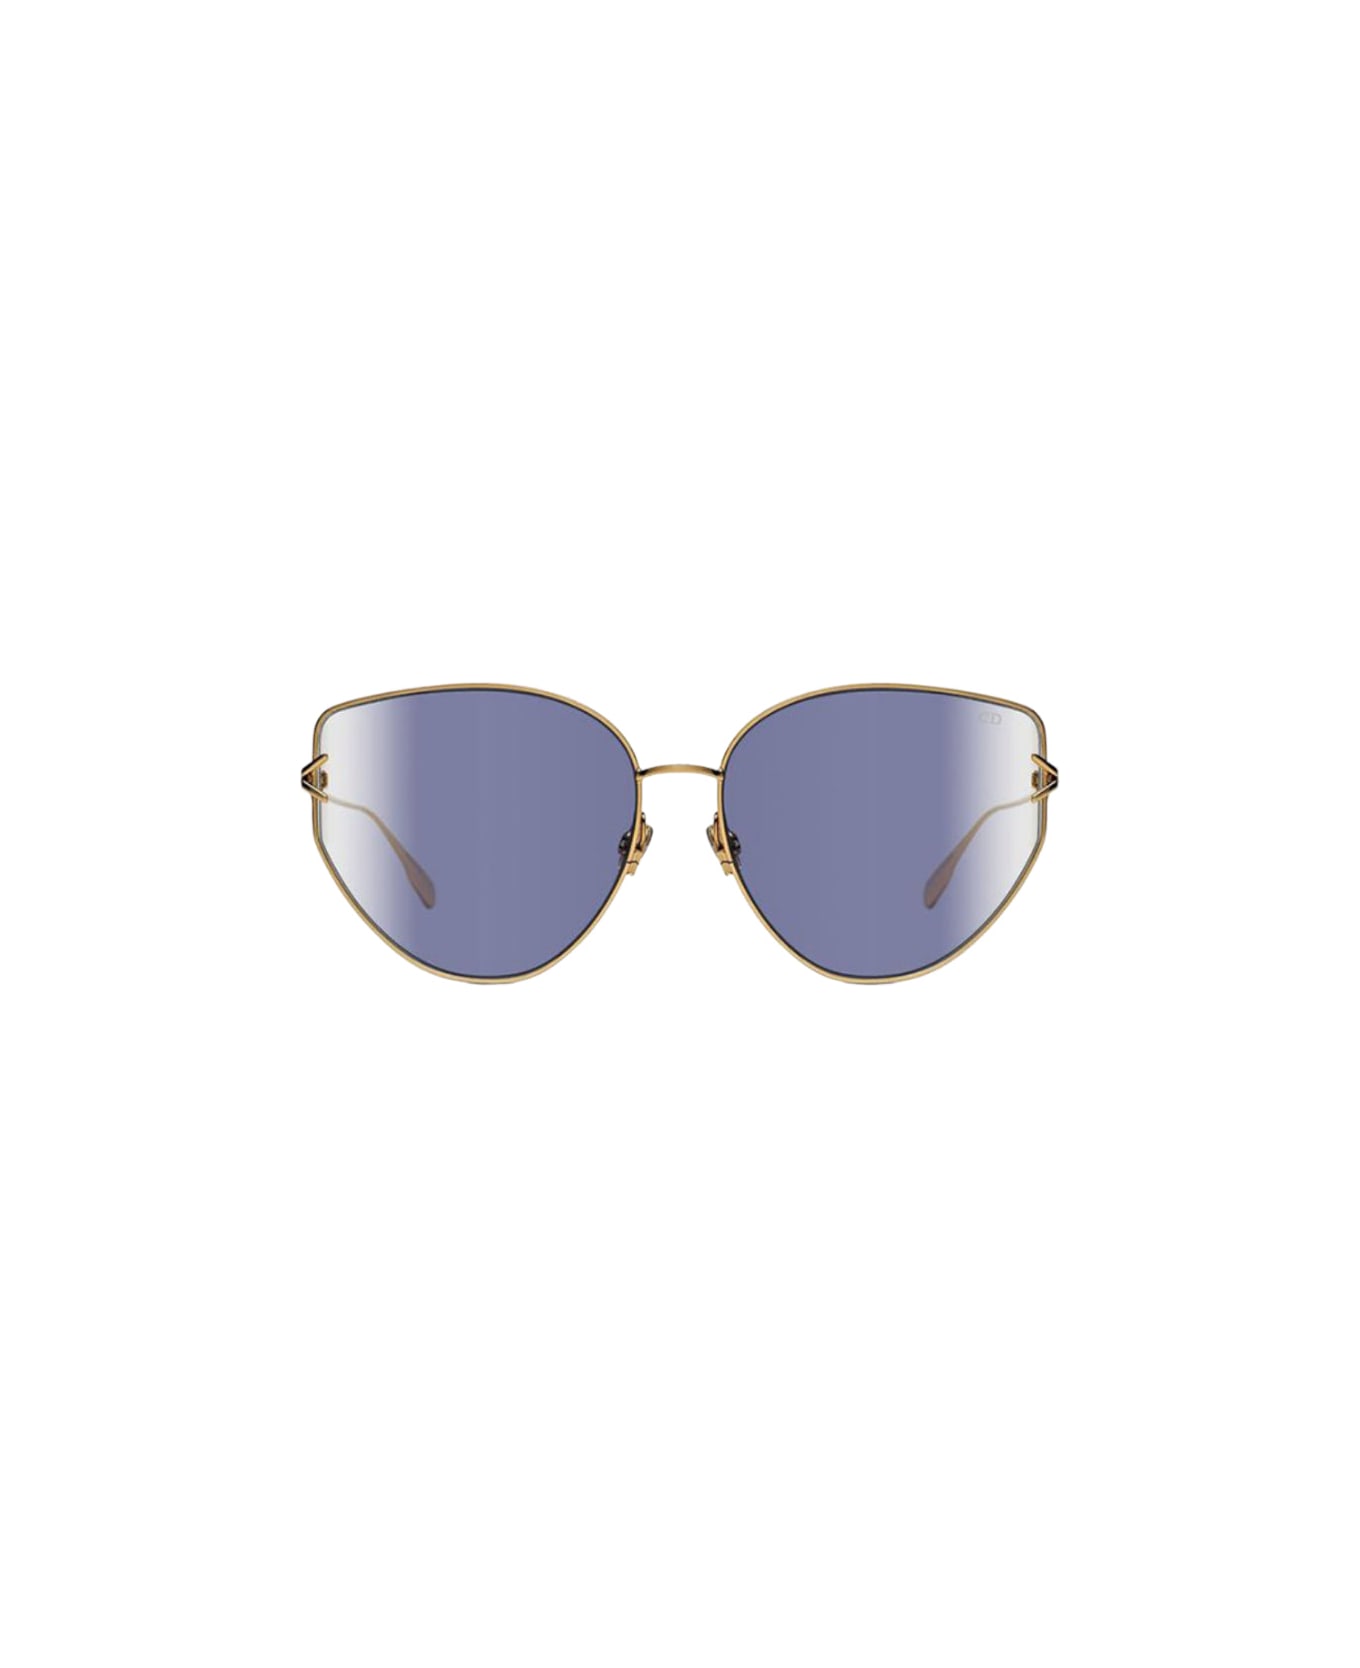 Dior Eyewear Gipsy 1 - Rose Gold Sunglasses